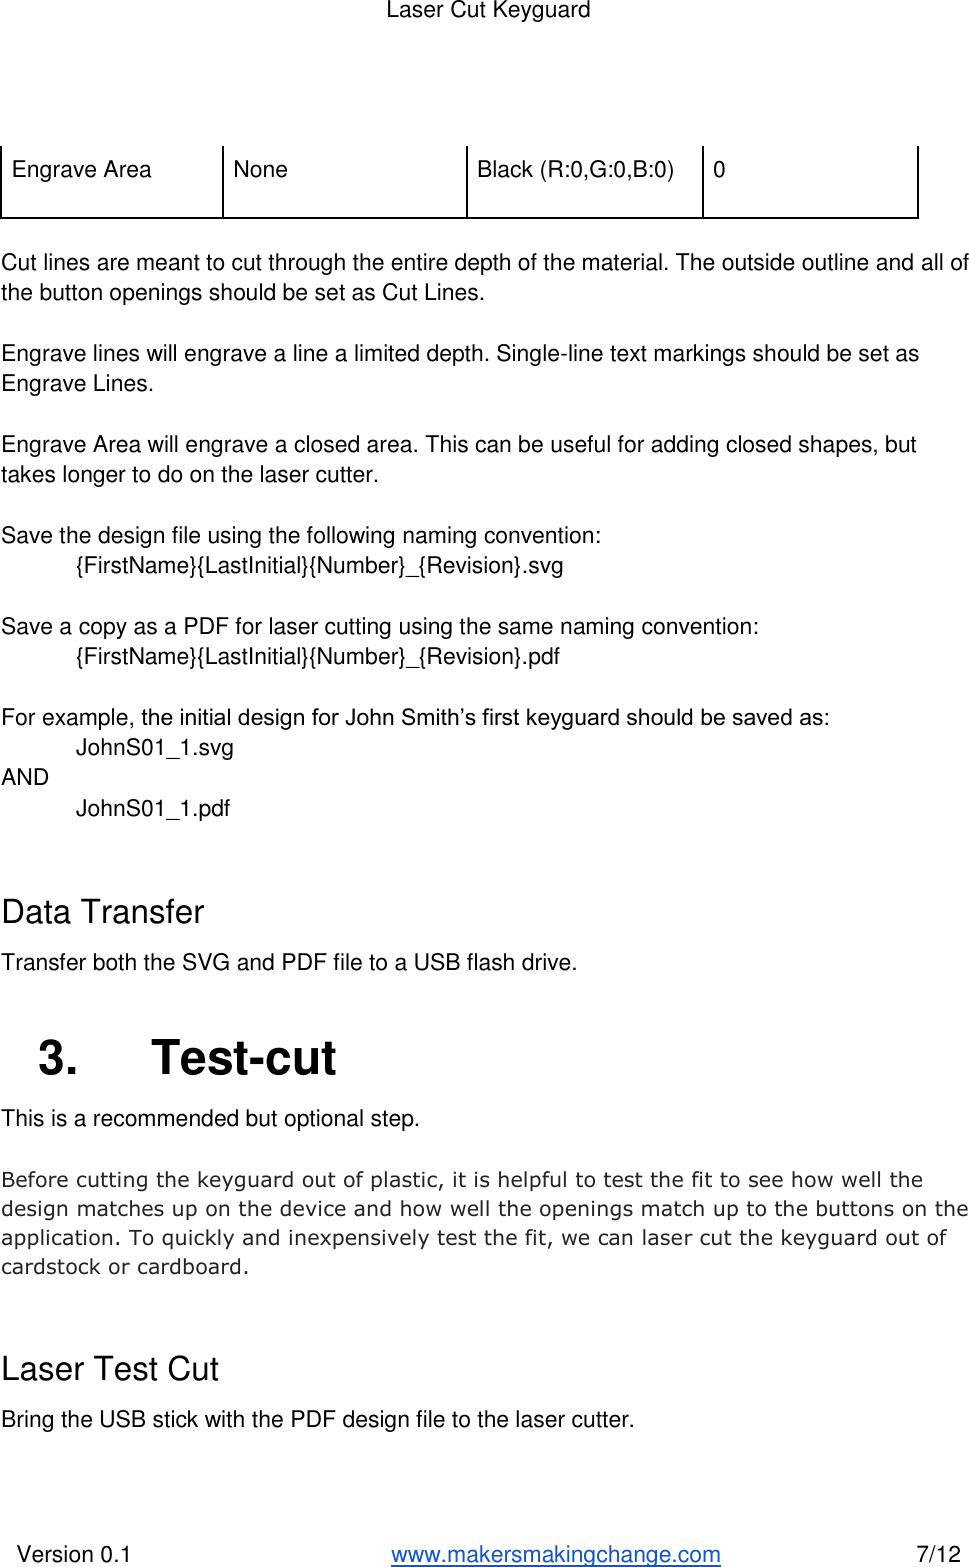 Page 7 of 12 - Lasercut Keyguard Instructions V0.1